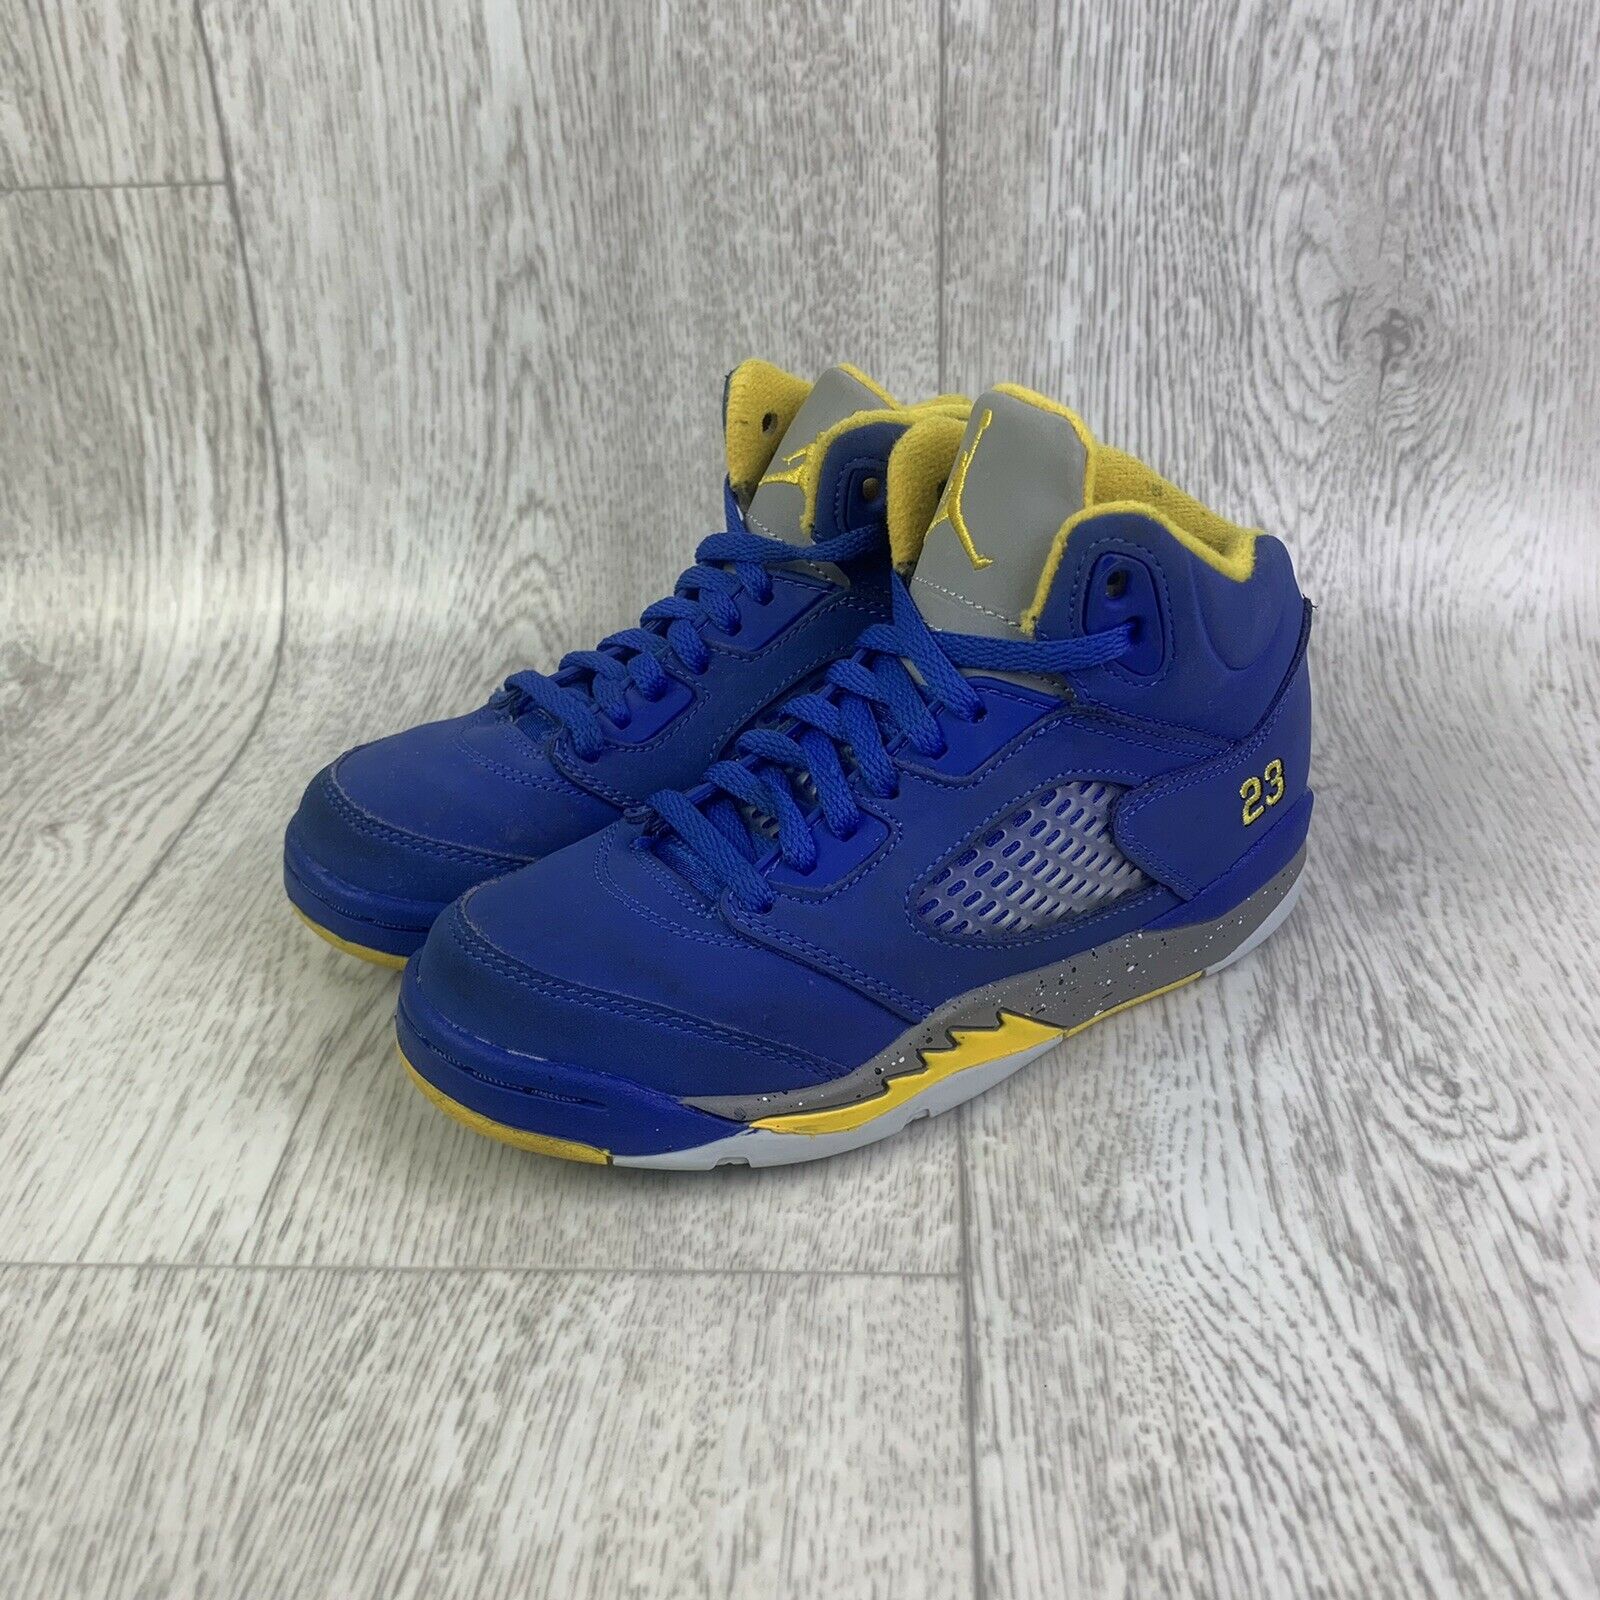 Nike Air Jordan V 5 Retro Laney Kids Shoes Size 13c Blue Yellow C13288-400